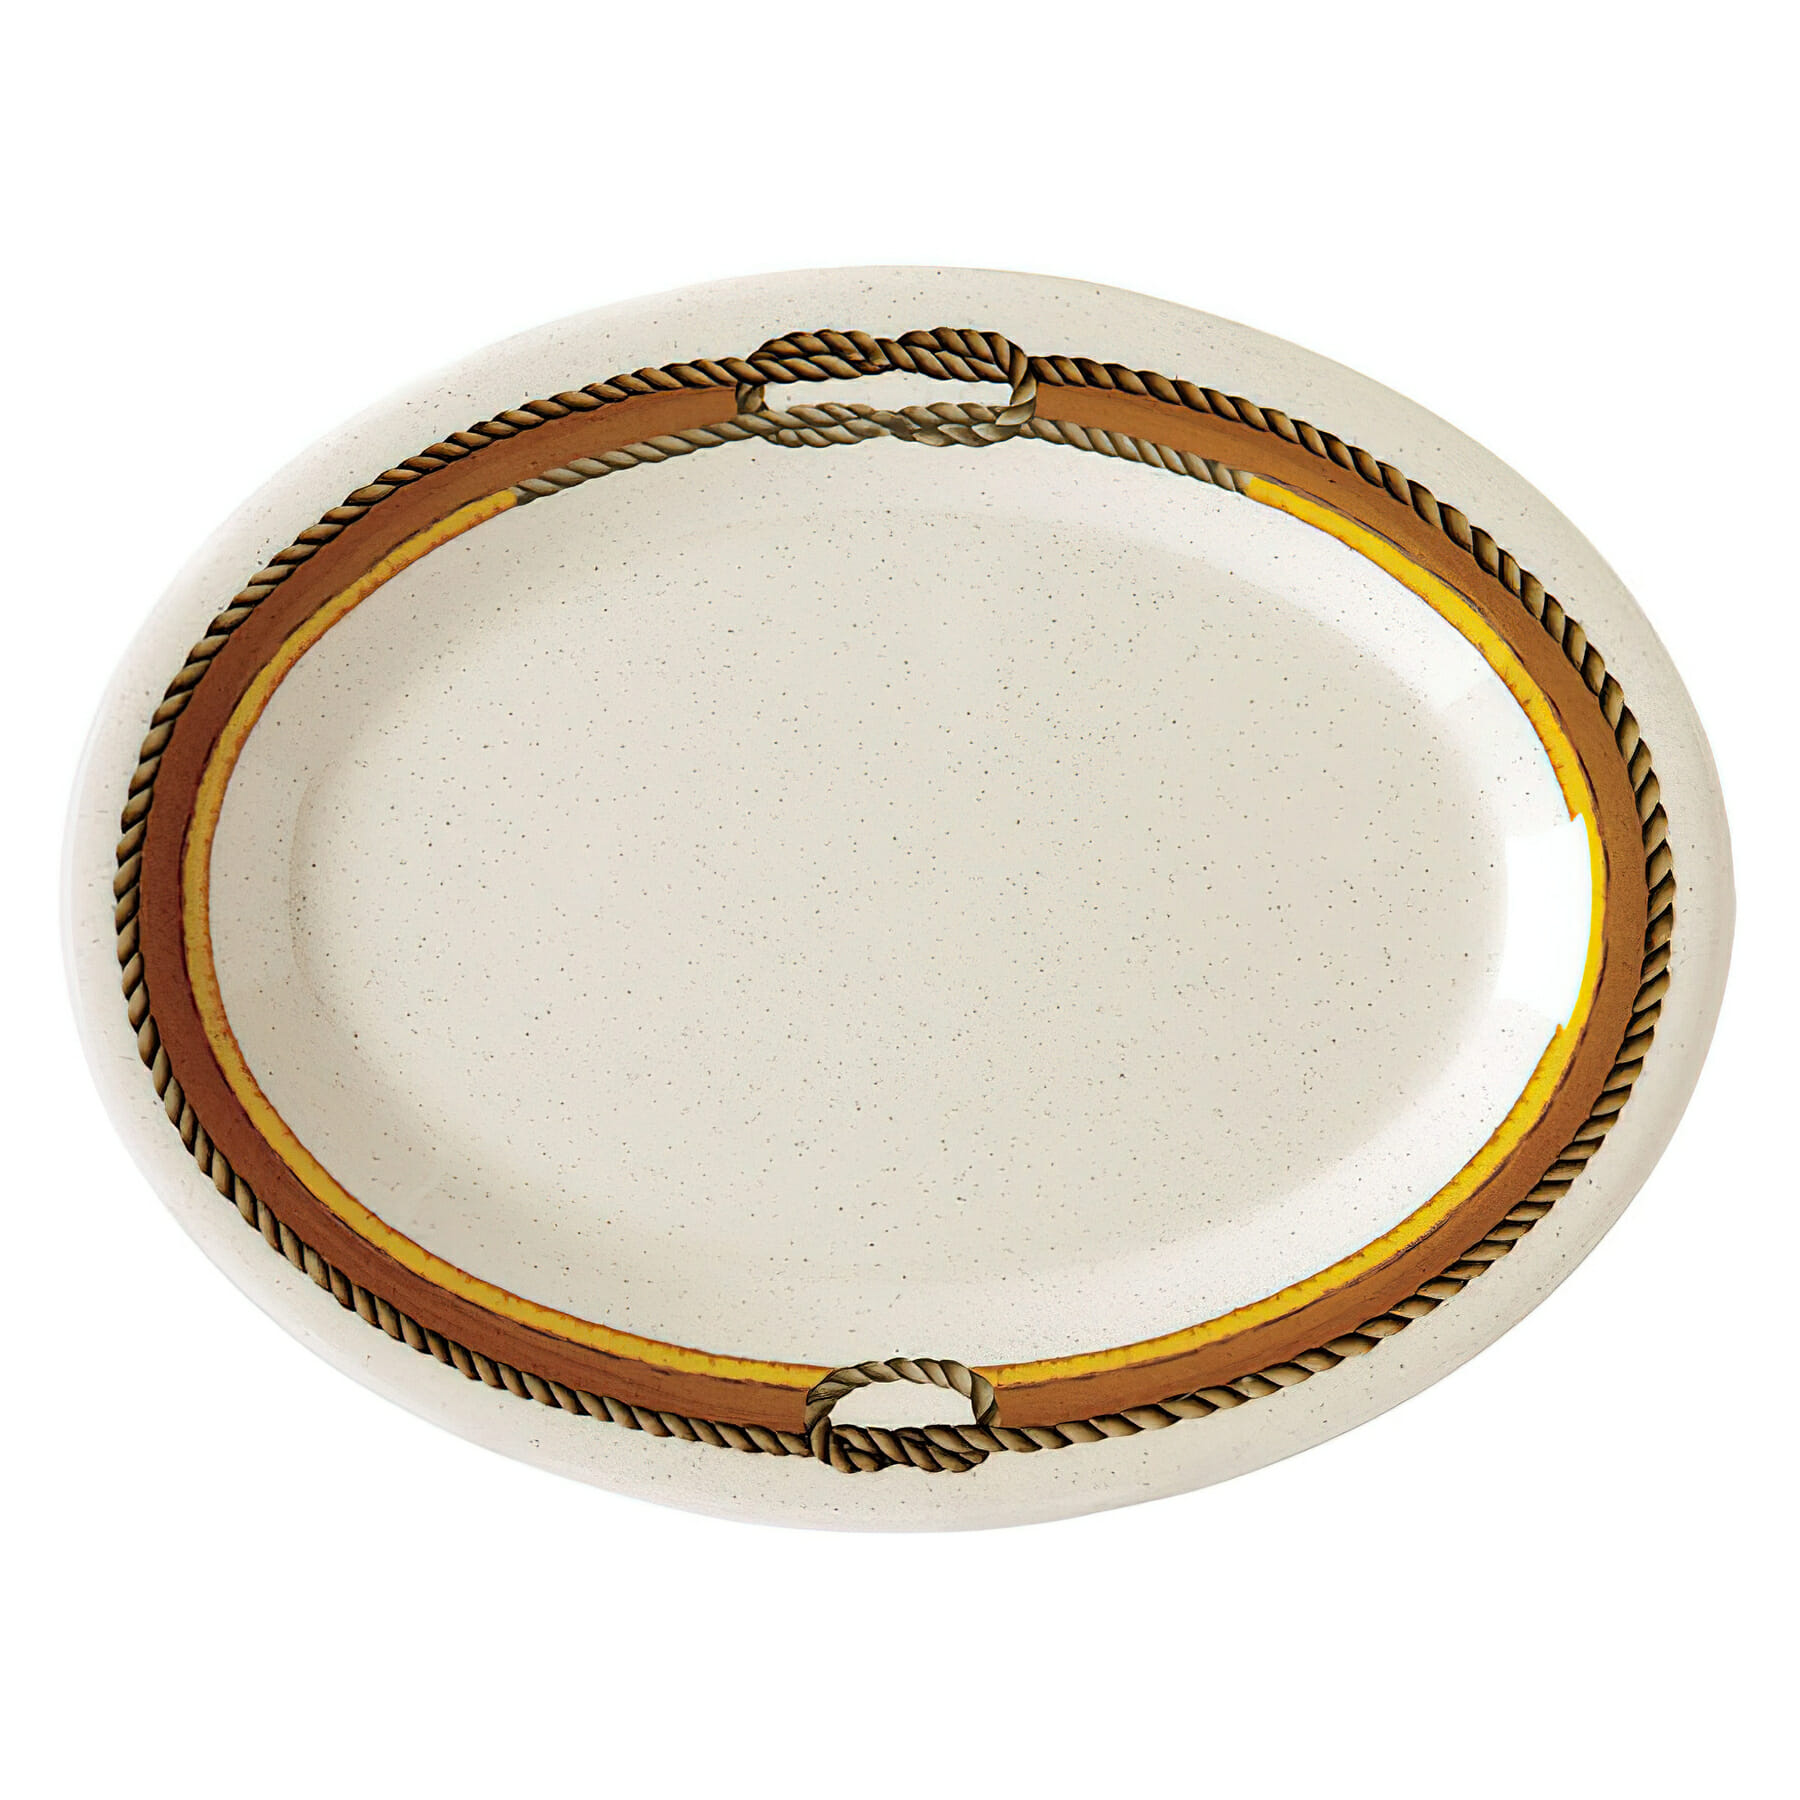 12" x 9" Oval Platter